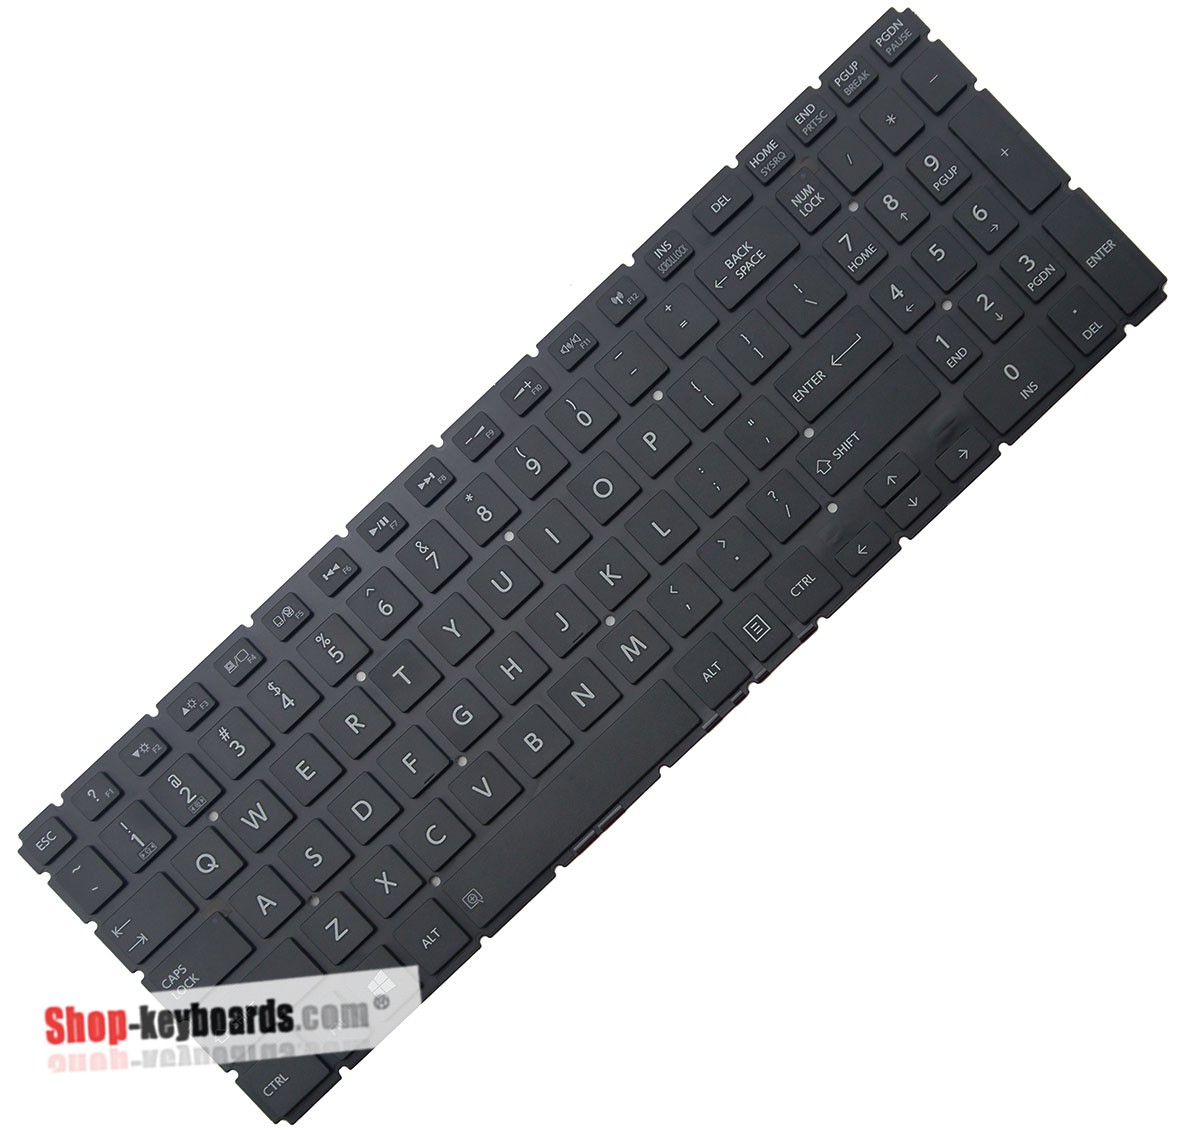 Toshiba SATELLITE C70D-C Keyboard replacement